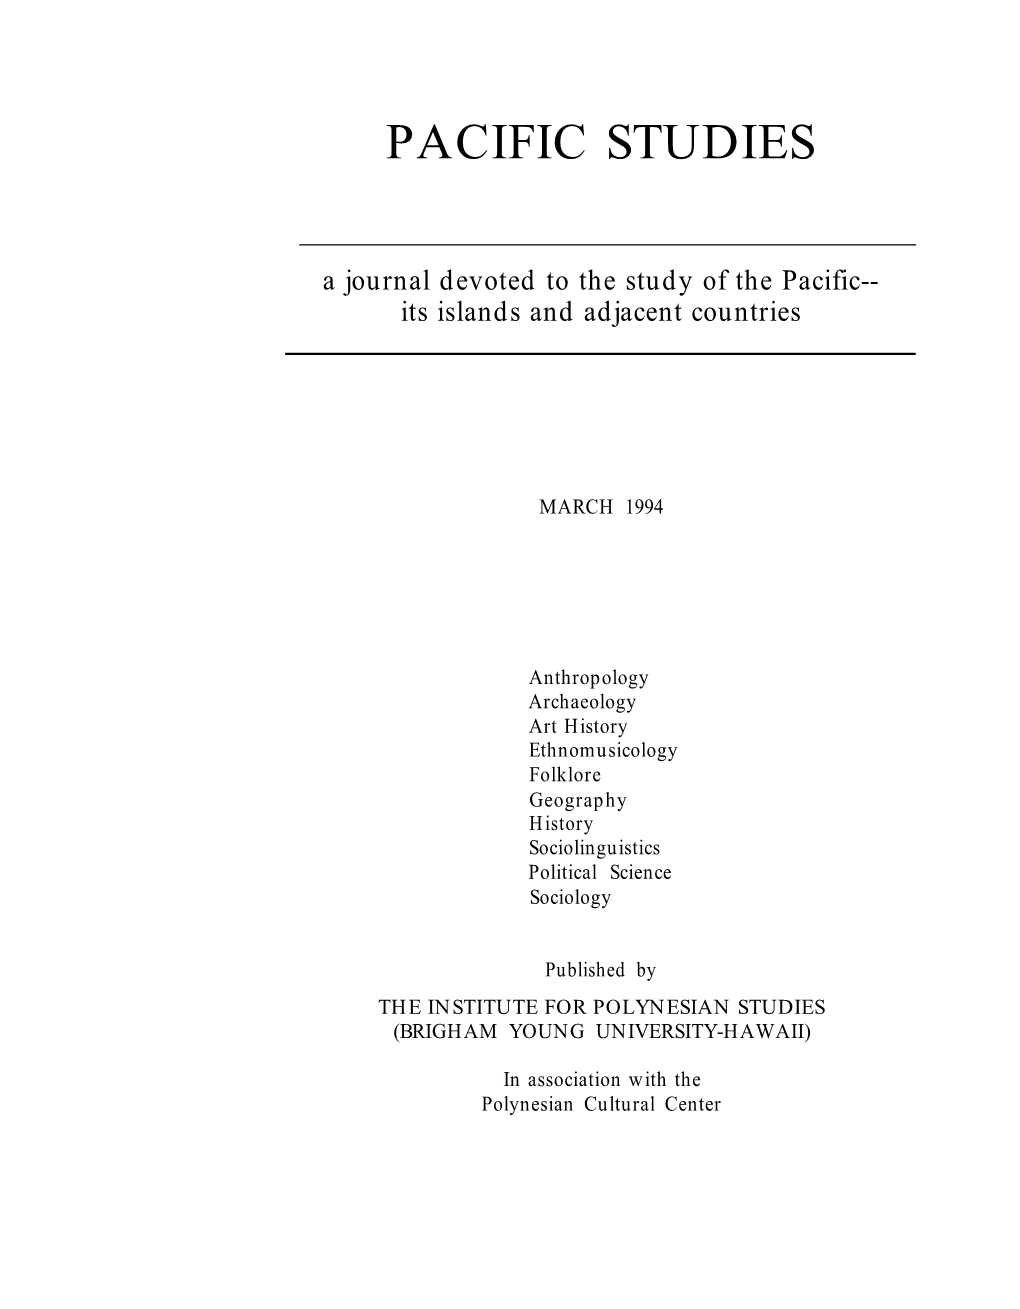 Vol. 17 No. 1 Pacific Studies